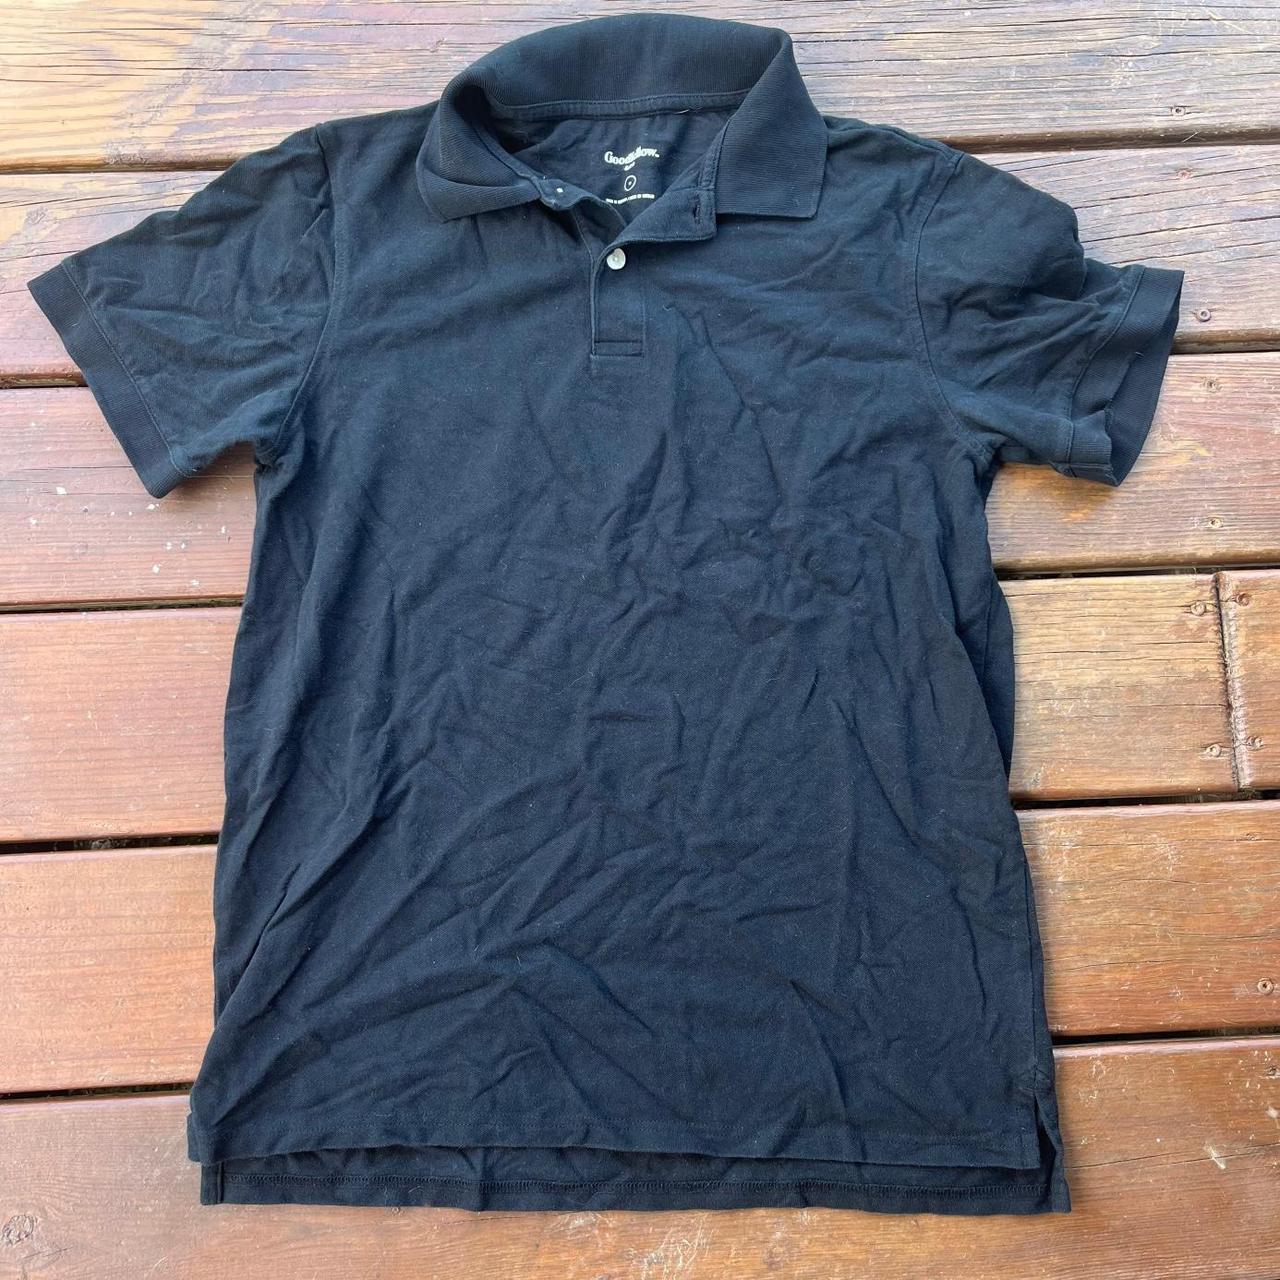 black polo t shirt size medium brand goodfellow &... - Depop